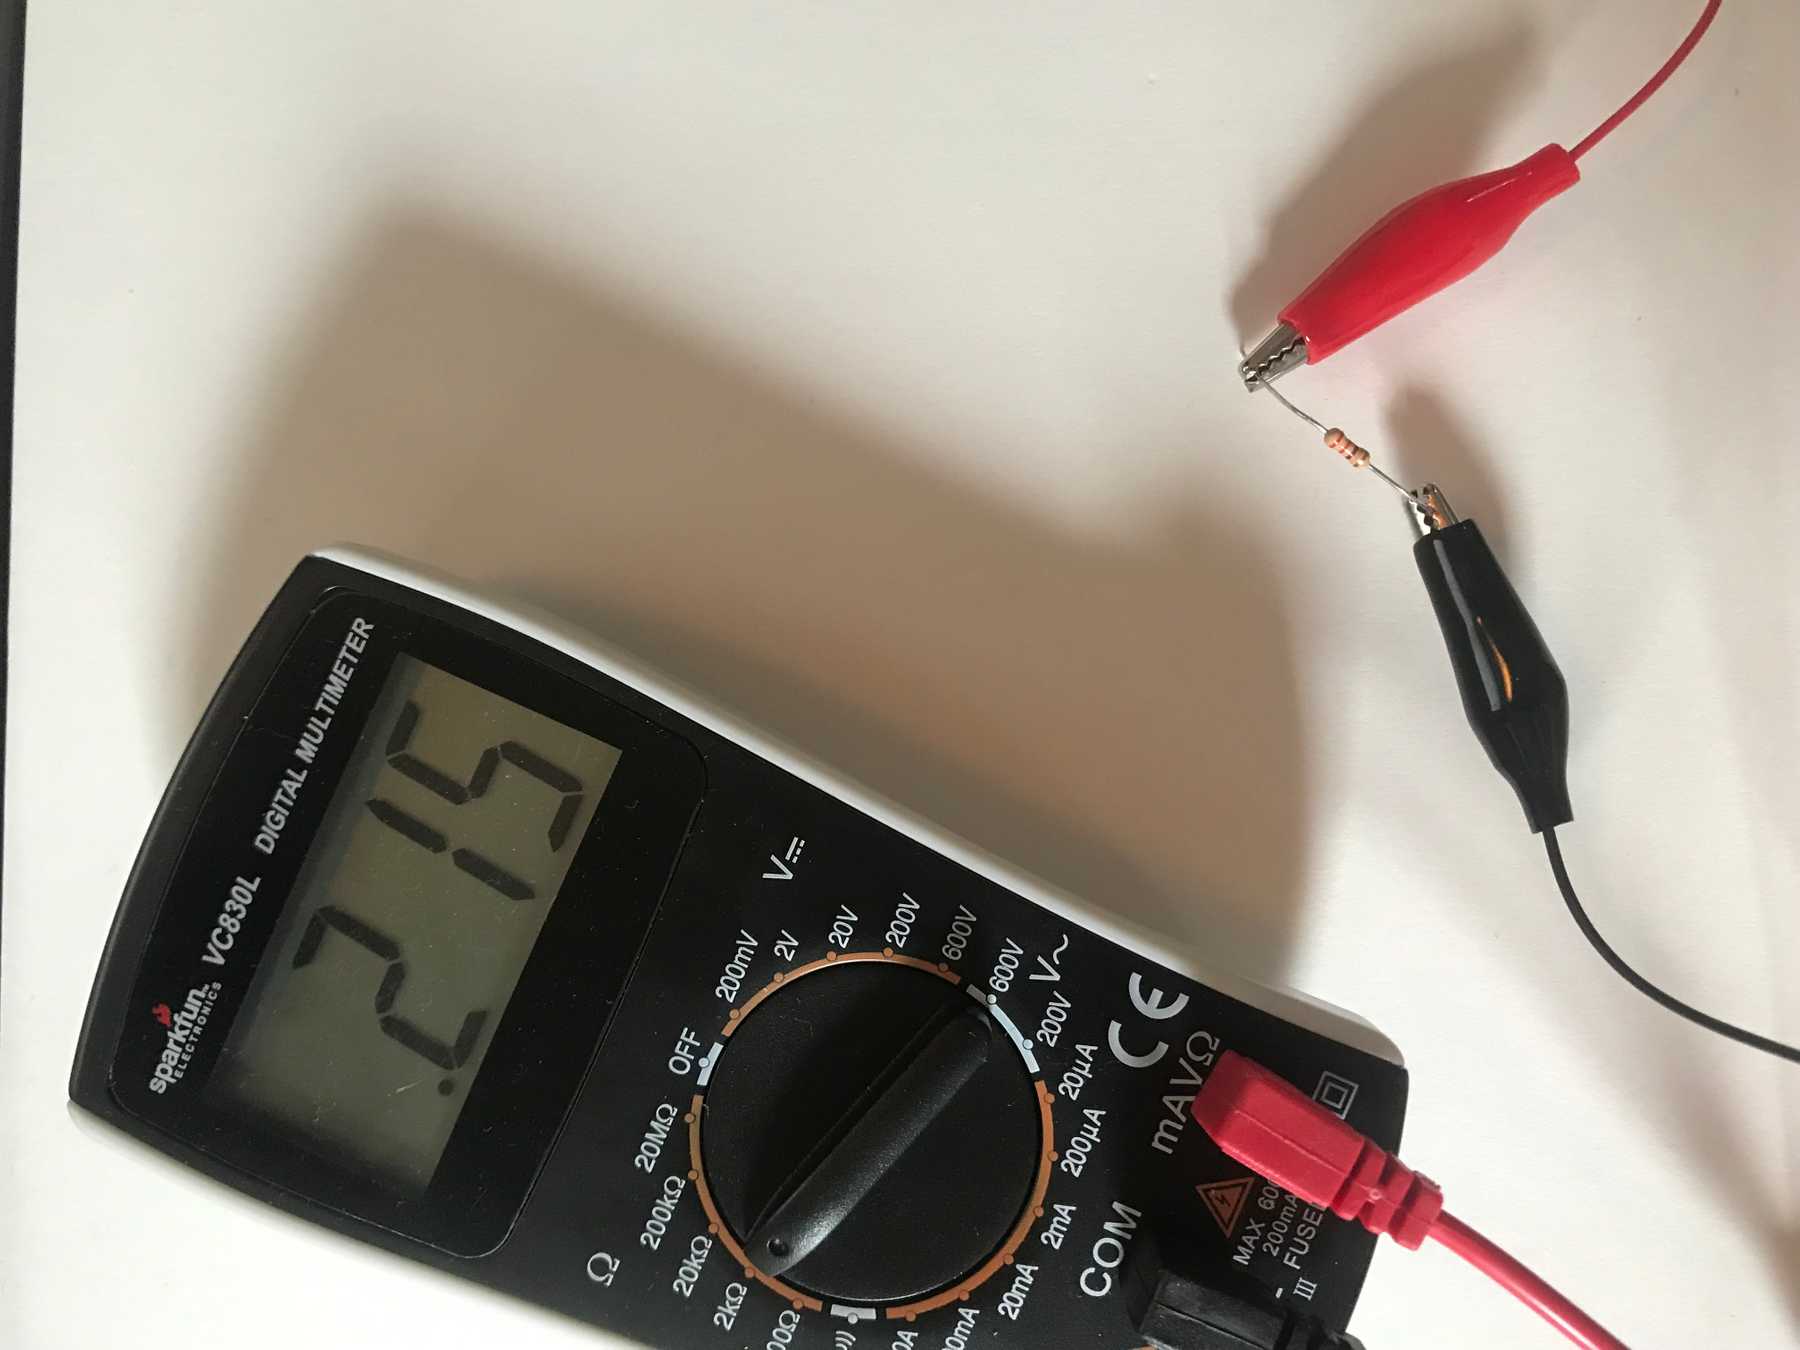 Measuring a 220Ω resistor